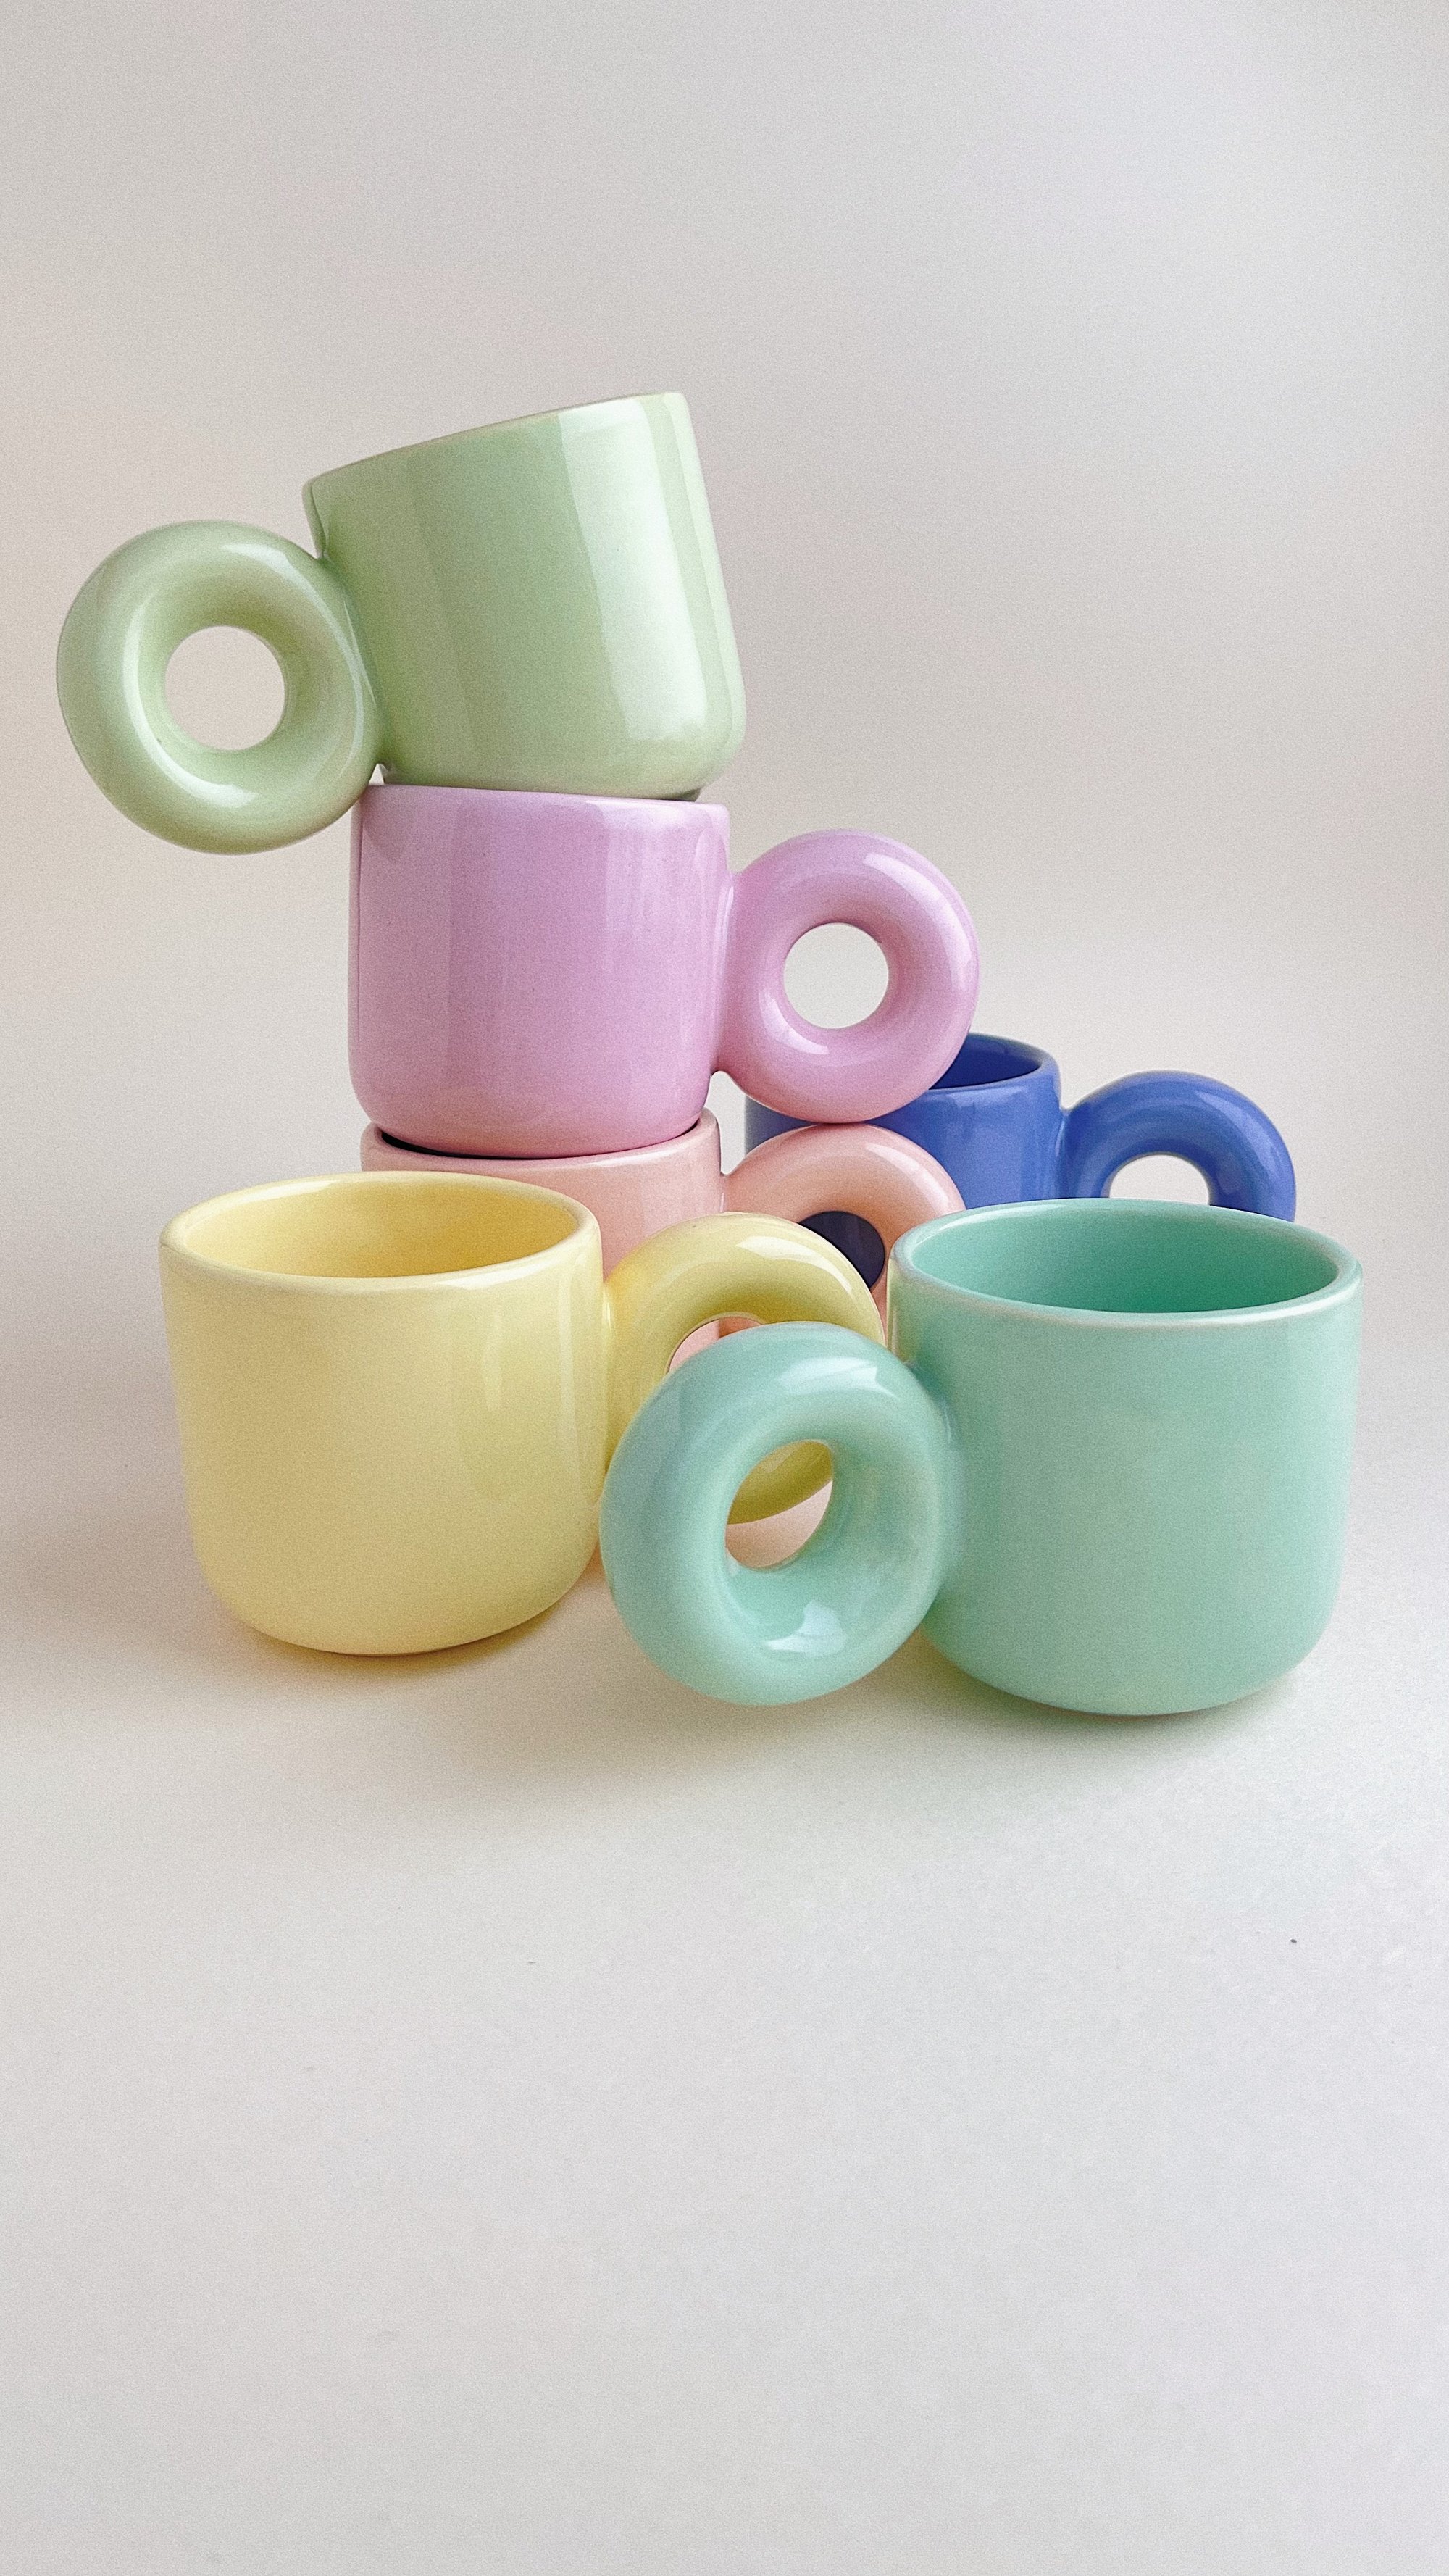 GET TM-1308-MIX 8 oz Plastic Coffee Mug, Assorted Colors